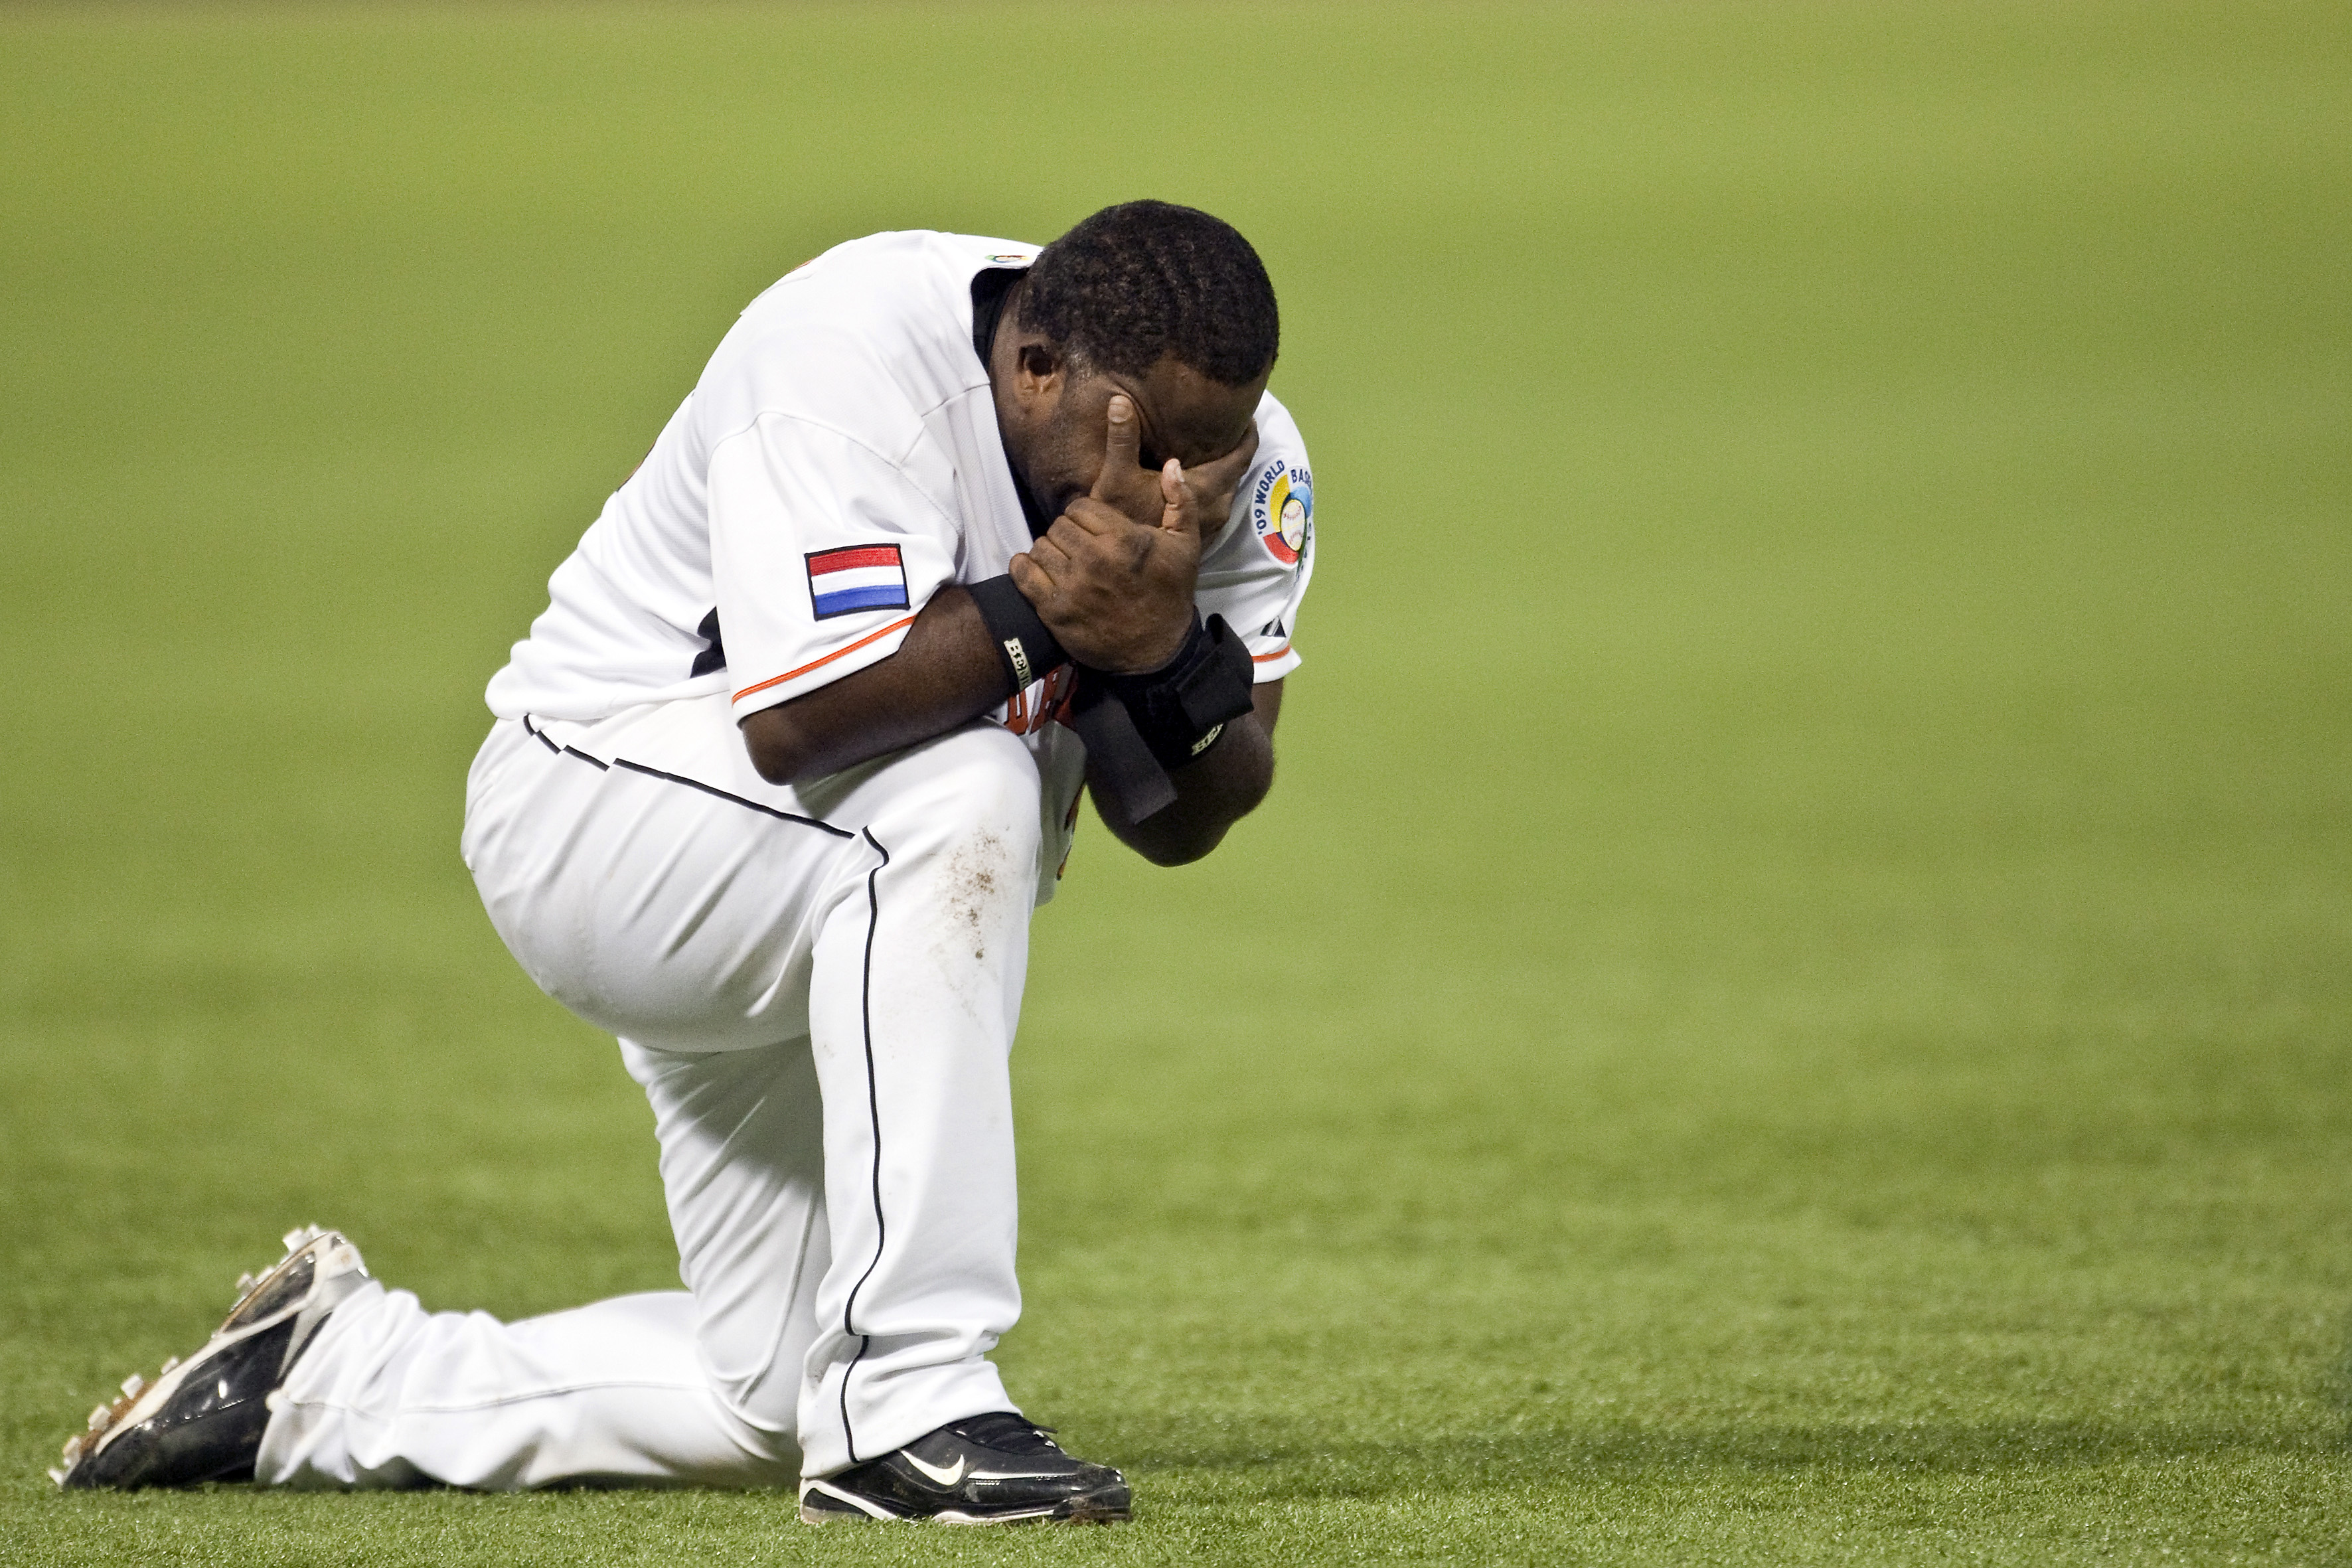 Randall Simon cries the Dominican Republic lost a 2009 World Baseball Classic game